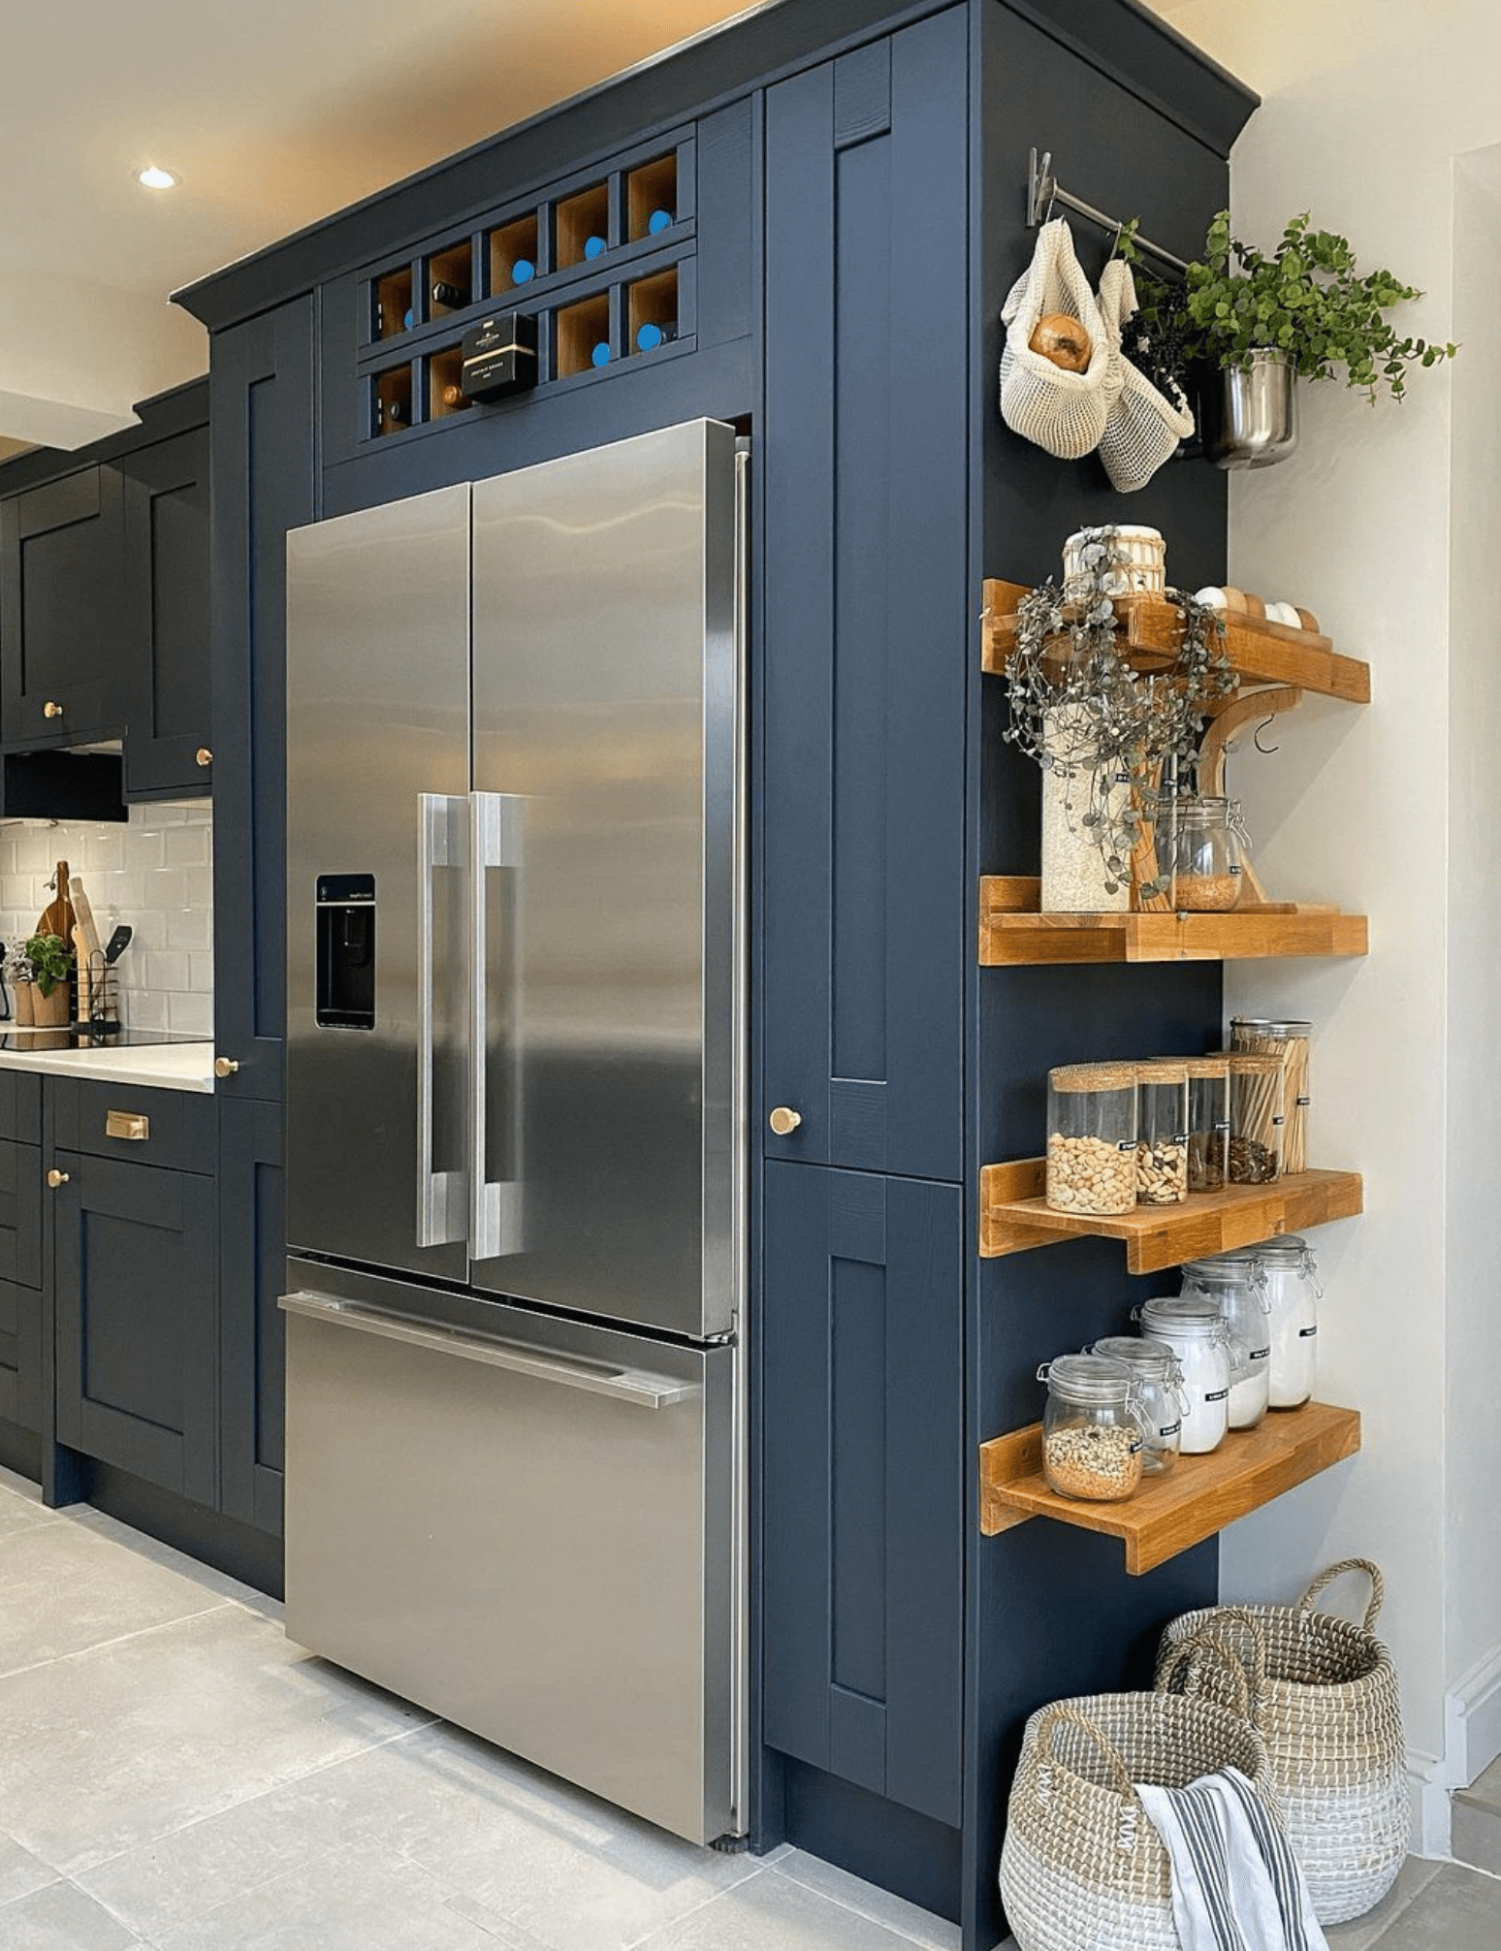 4 Genius Storage Ideas to Maximize Your Small Kitchen - how do you maximize storage in a small kitchen?